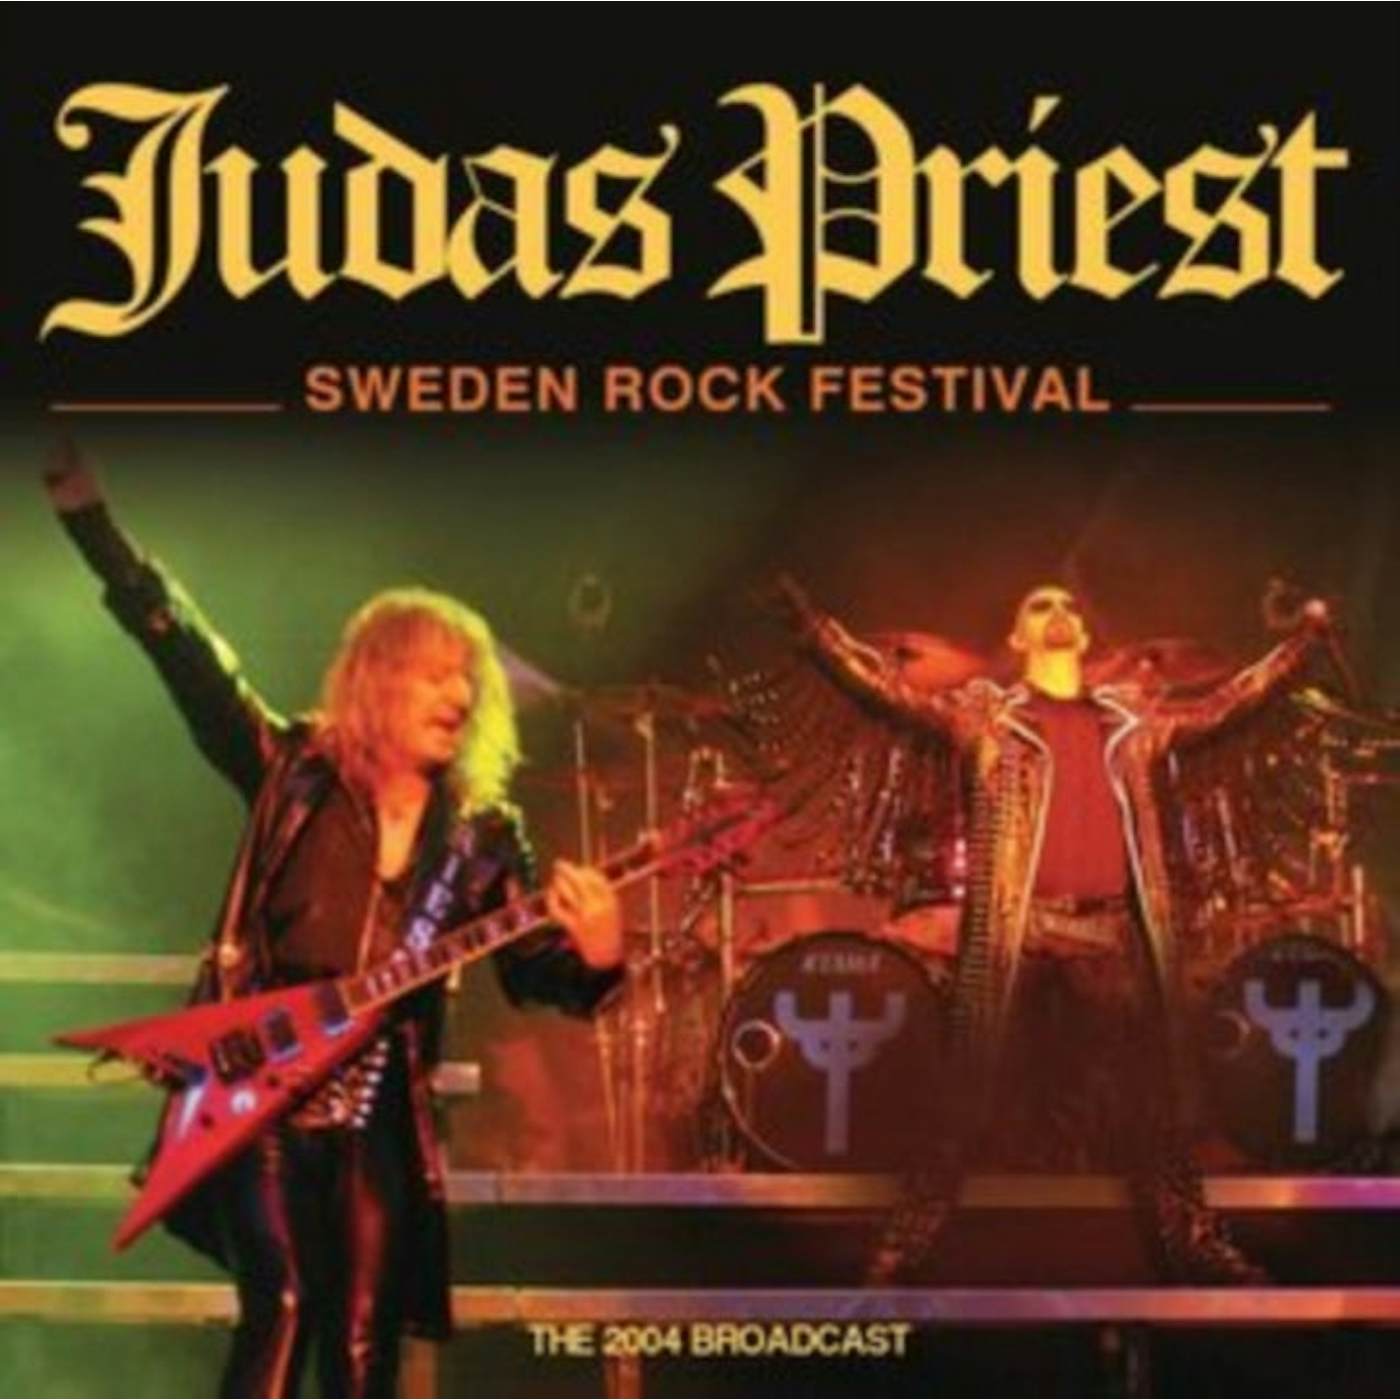 Judas Priest Point Of Entry - Vinilo — Palacio de la Música